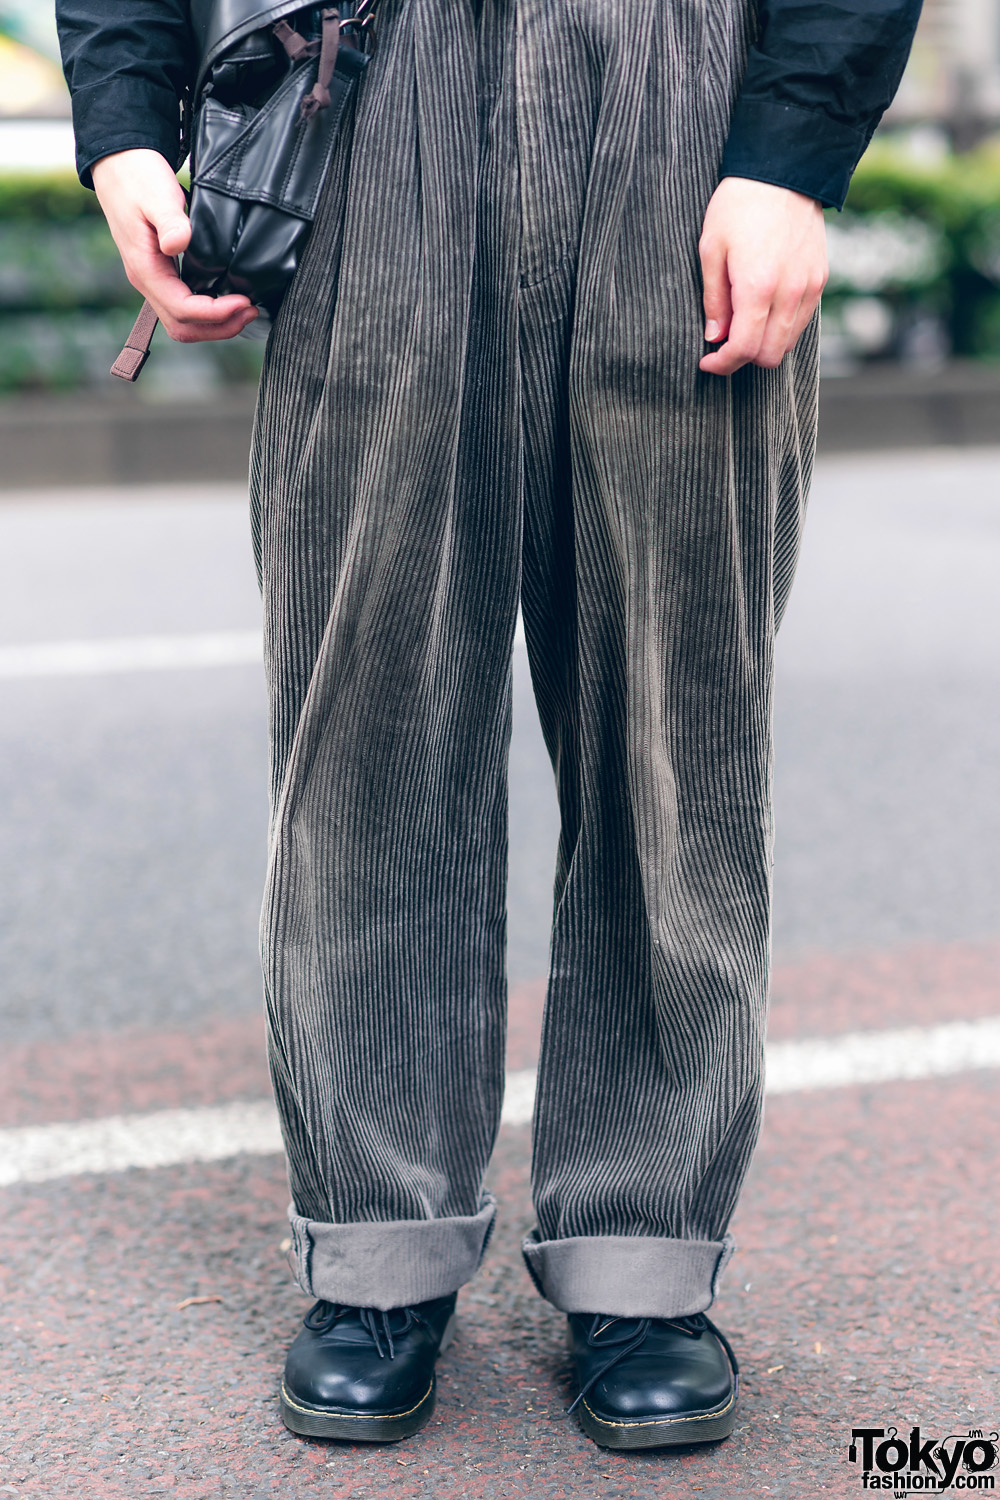 Mens Dockers Brown Corduroy Pants (Pleated, Cuffed) 36x30 EUC | eBay